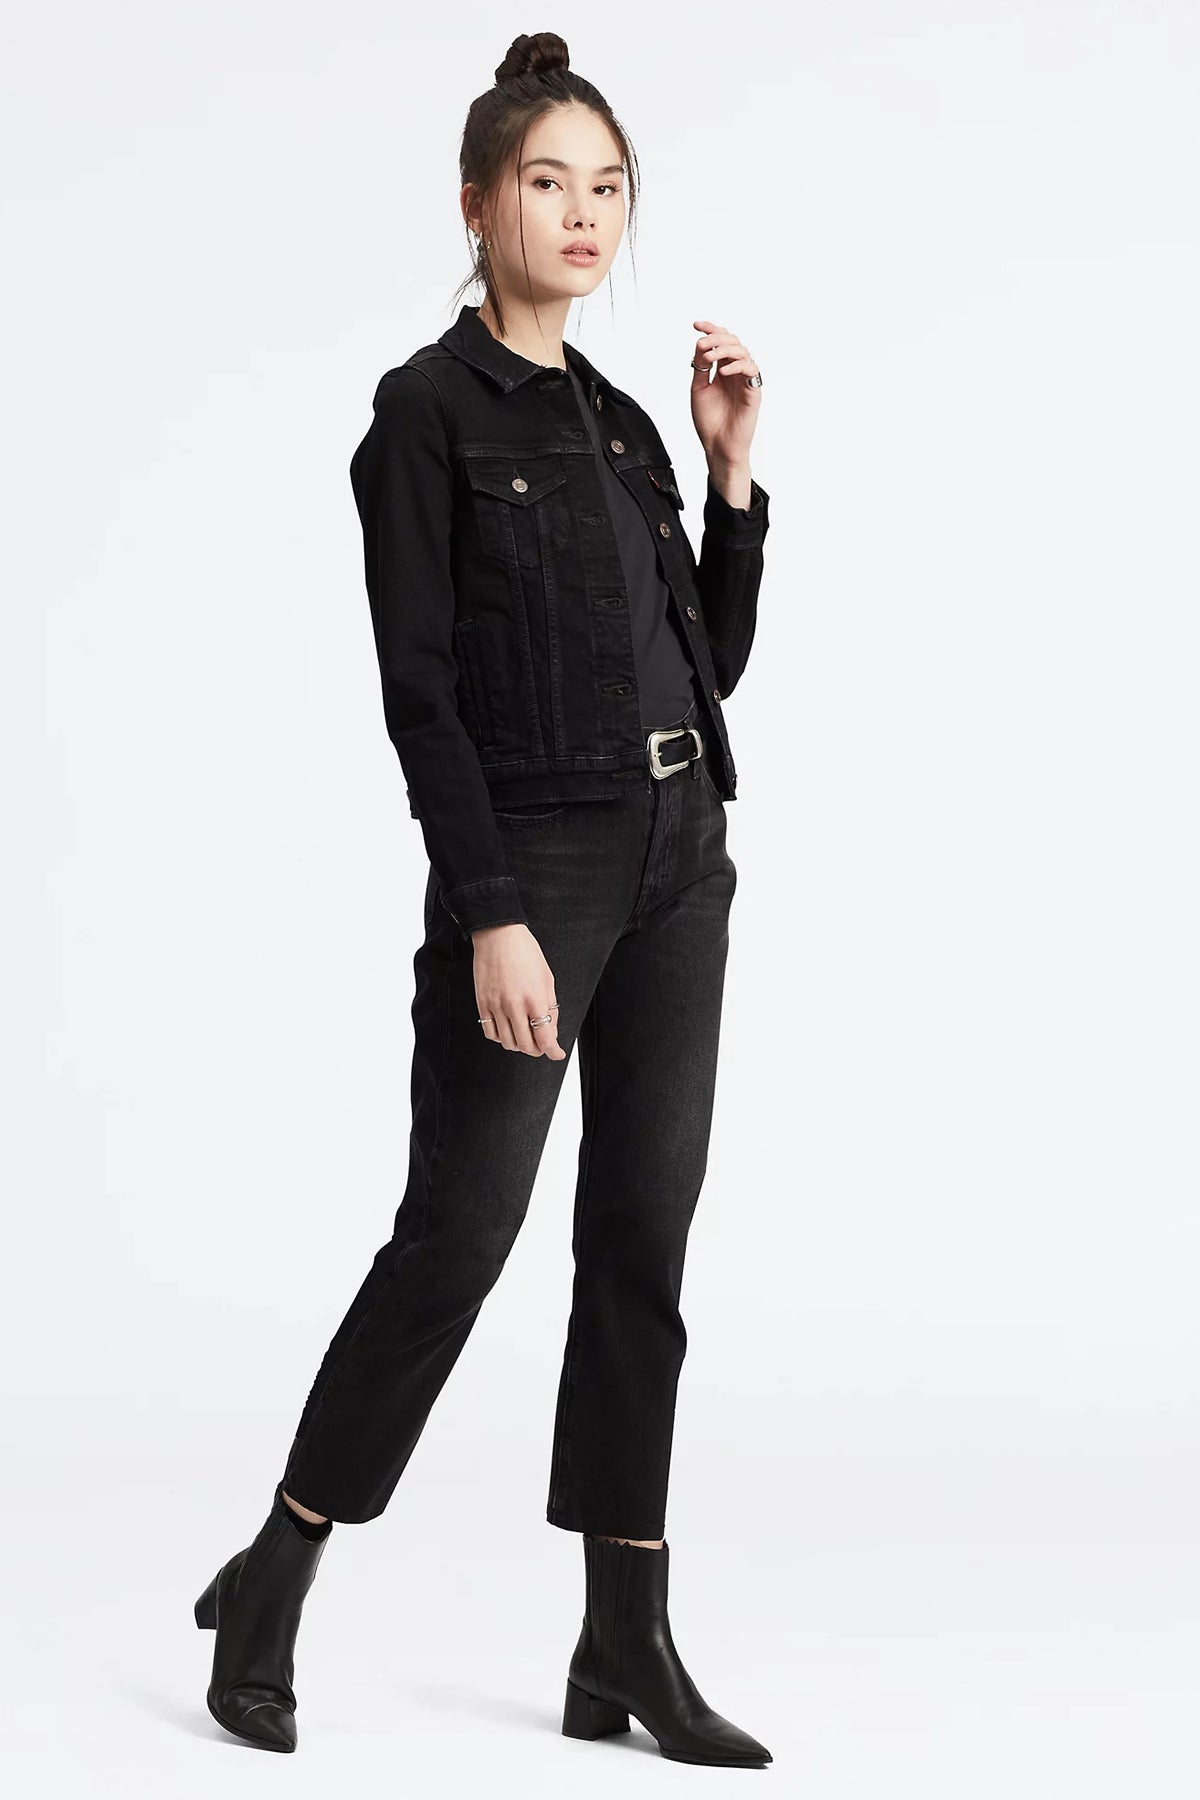 Levi's Pamuklu Yüksek Bel Regular Fit 501 Jeans Bayan Kot Pantolon 36200-0085 SİYAH